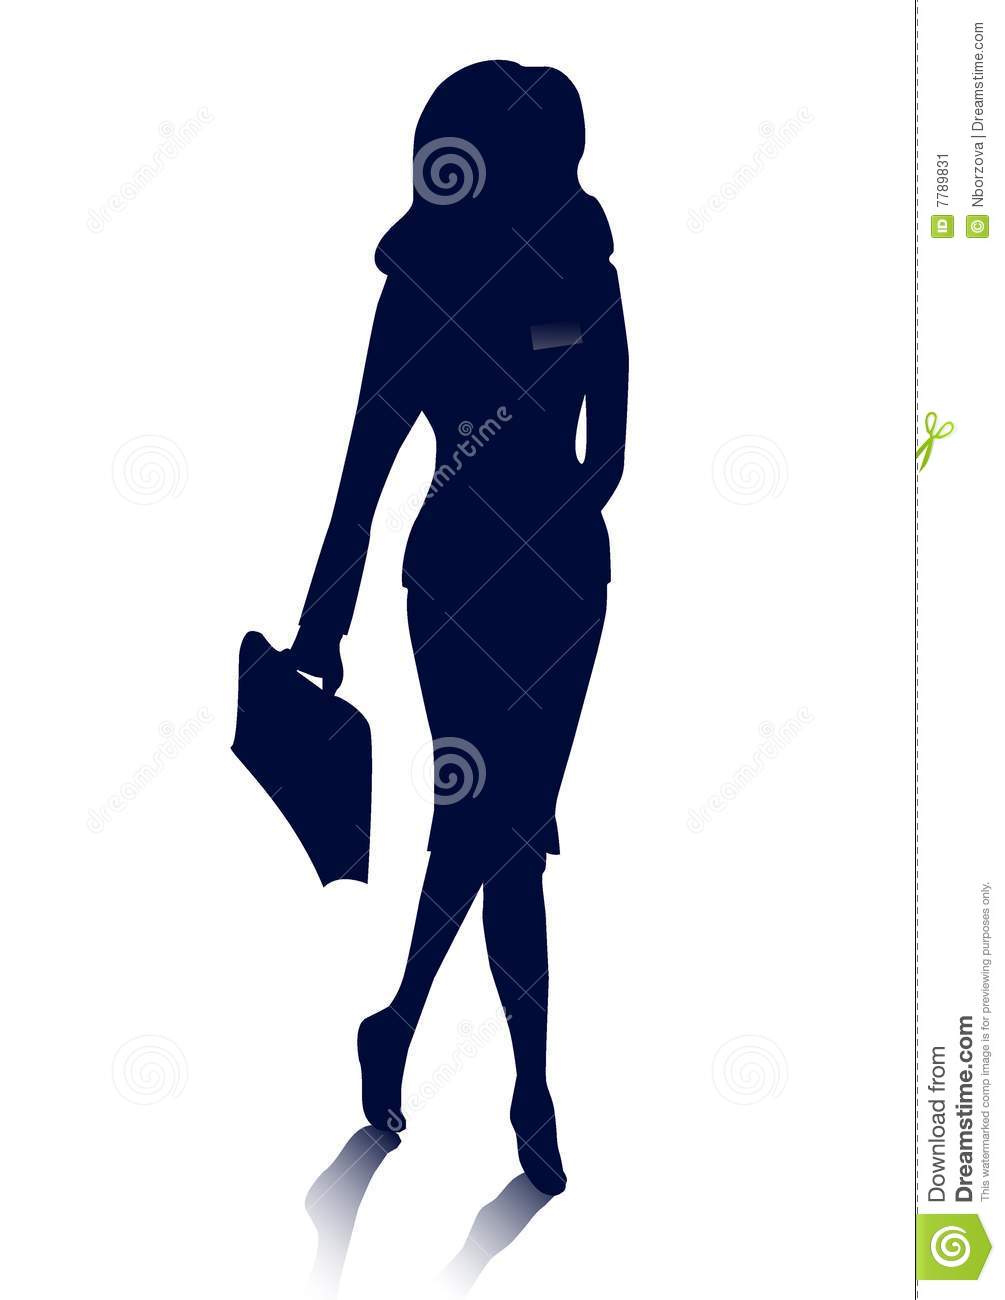 Businesswoman Silhouette Stock Image   Image  7789831